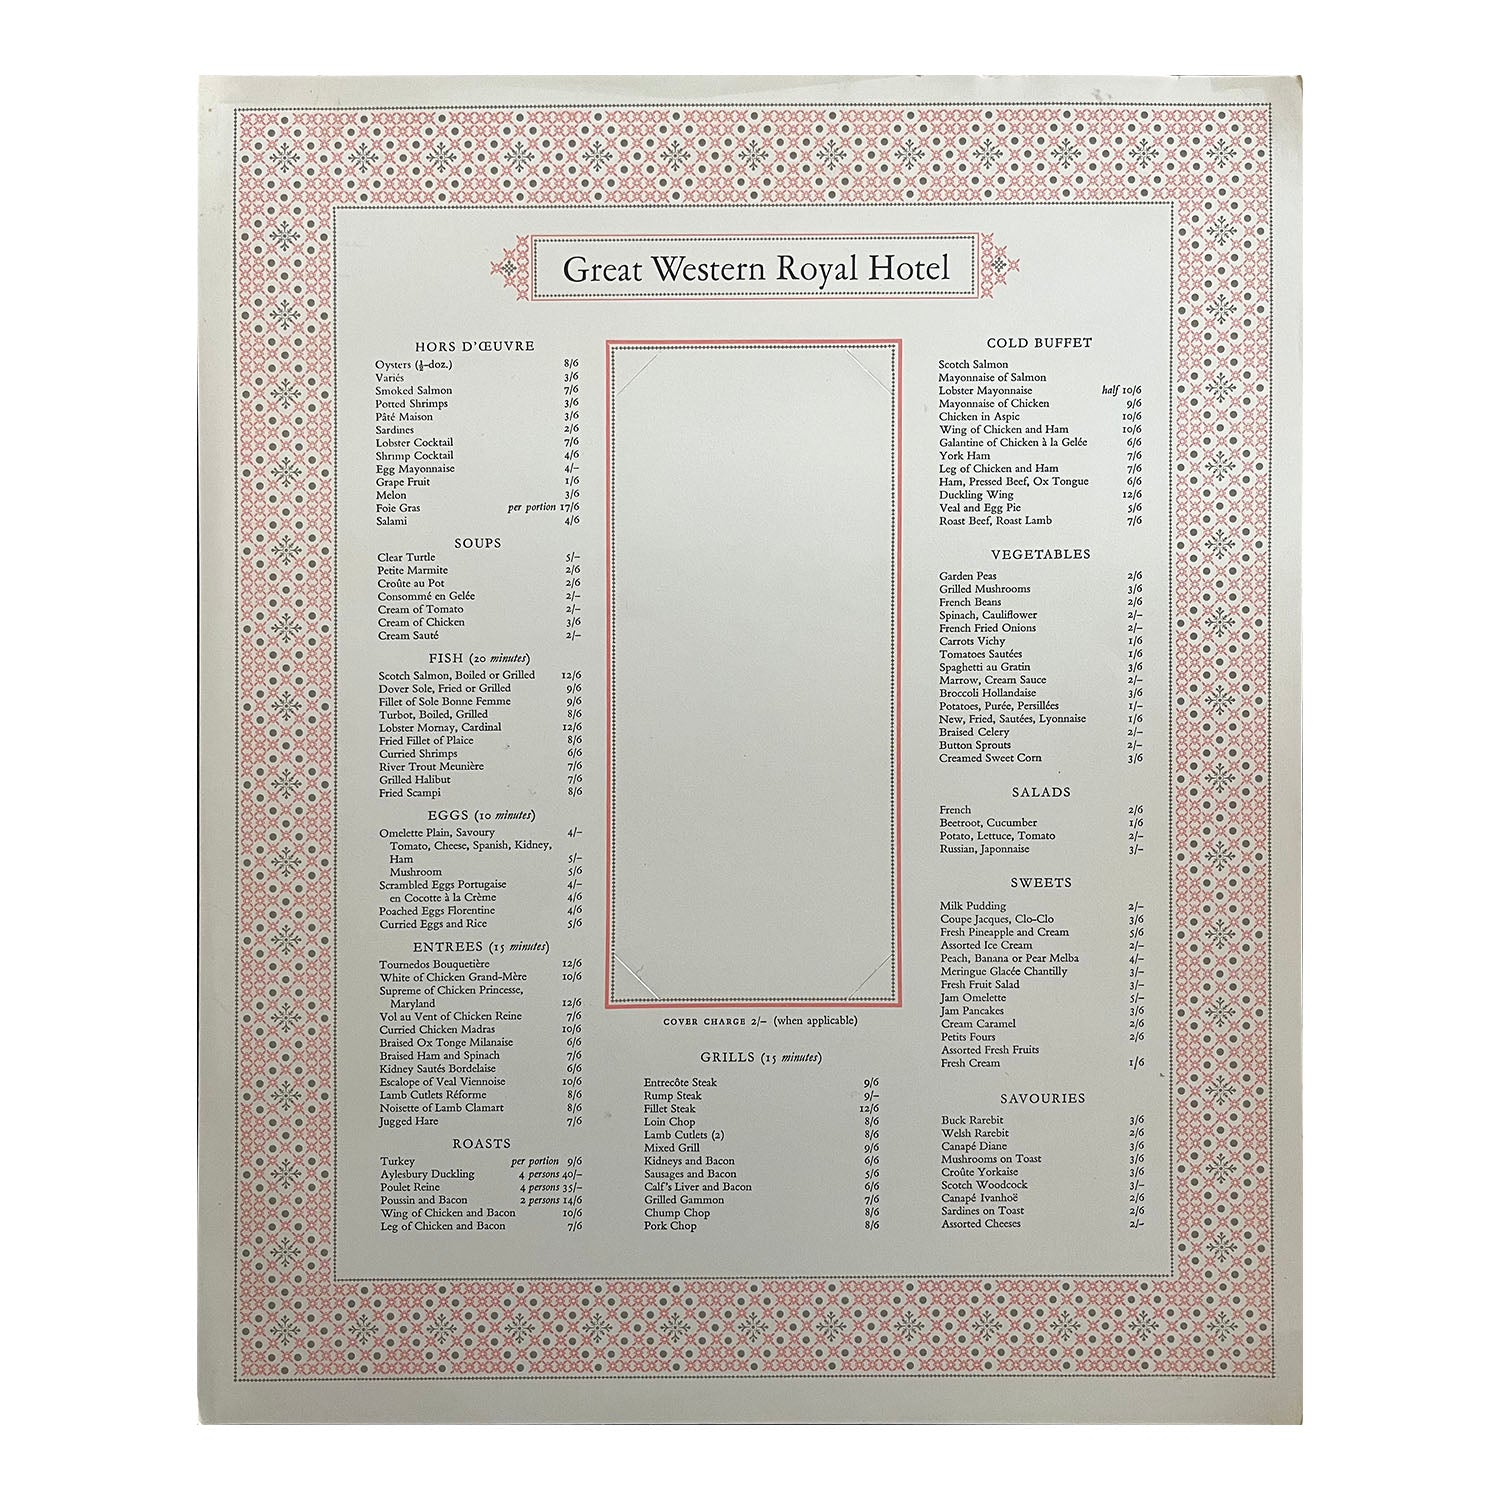 original railway hotel menu, Great Western Royal Hotel, printed by the Curwen Press, c. 1960. 